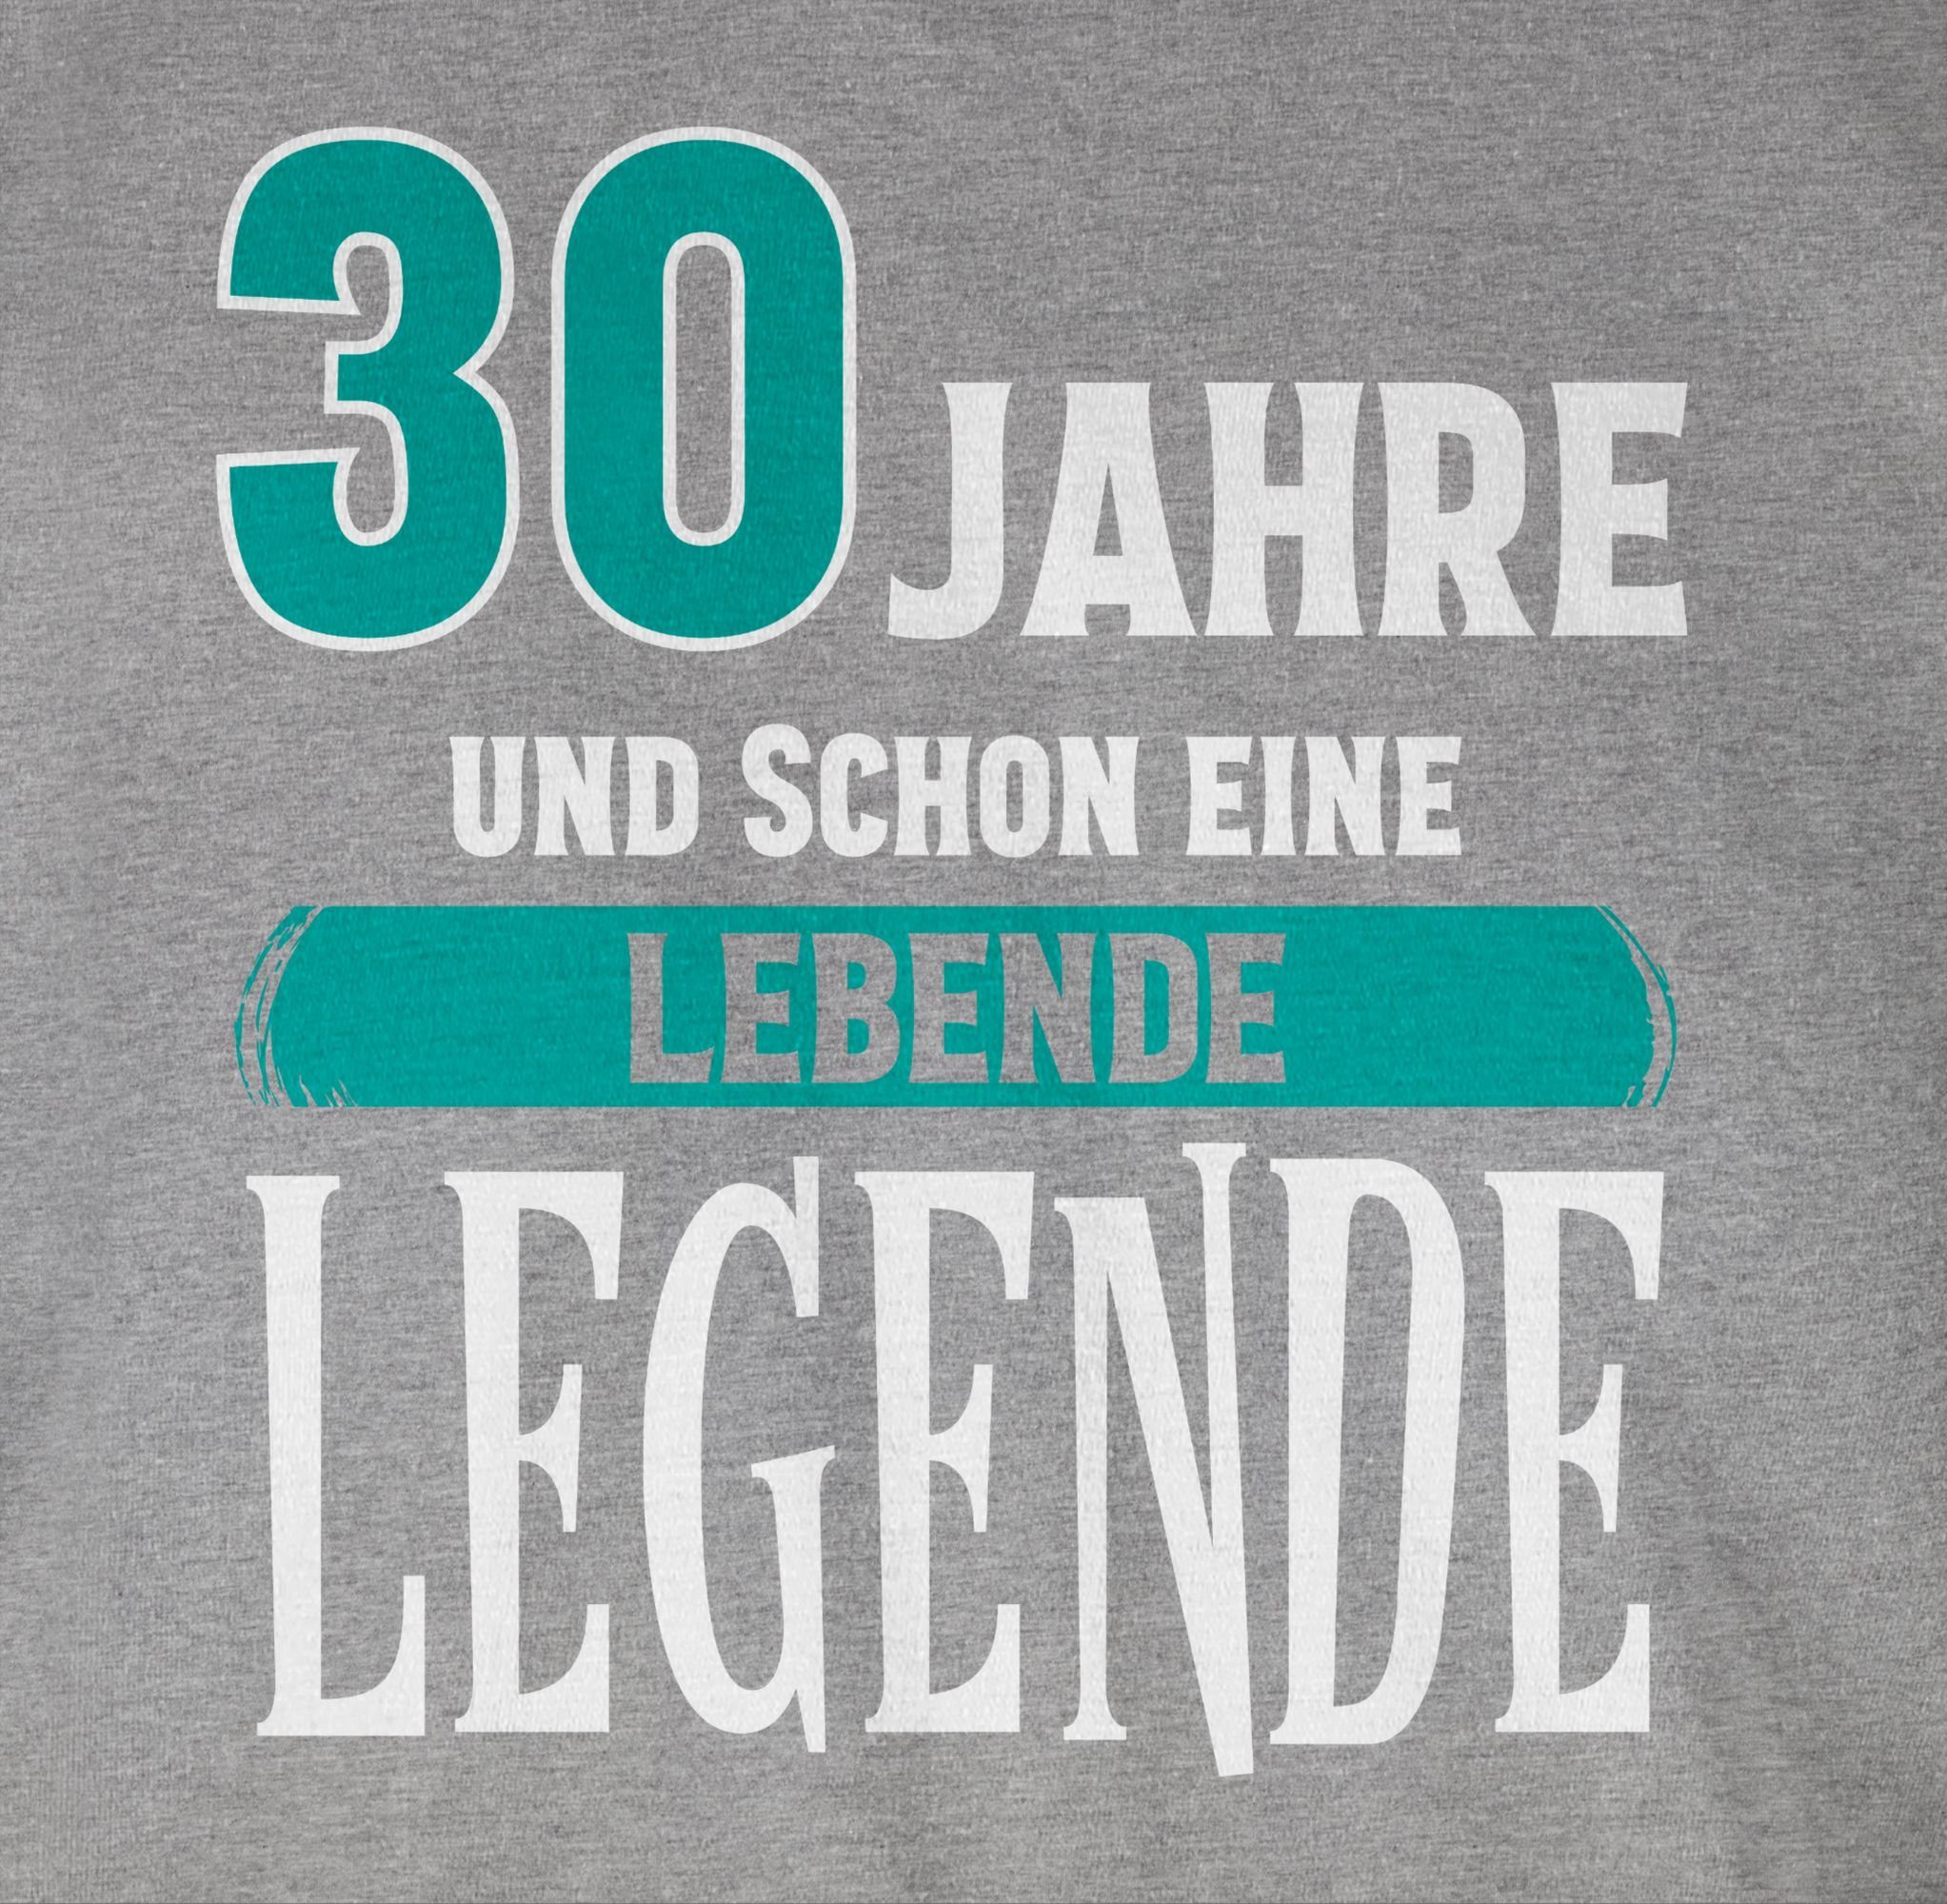 Shirtracer T-Shirt Dreißigster Legende Geschenk 30. Fun Grau Geburtstag meliert 3